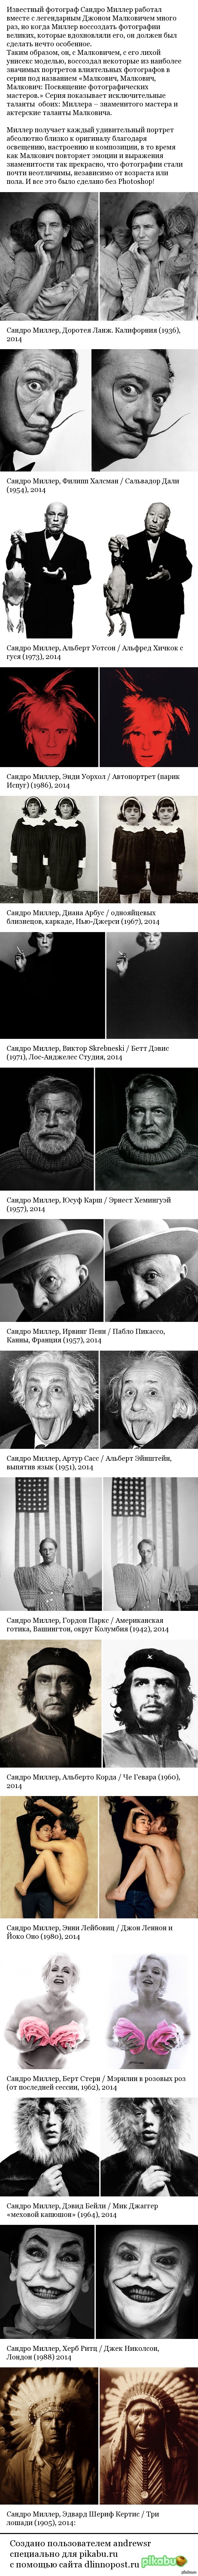 Malkovich, Malkovich, Malkovich: Dedication of the Photographic Masters - NSFW, John Malkovich, Sandro Miller, PHOTOSESSION, The photo, Longpost, Celebrities, Not photoshop